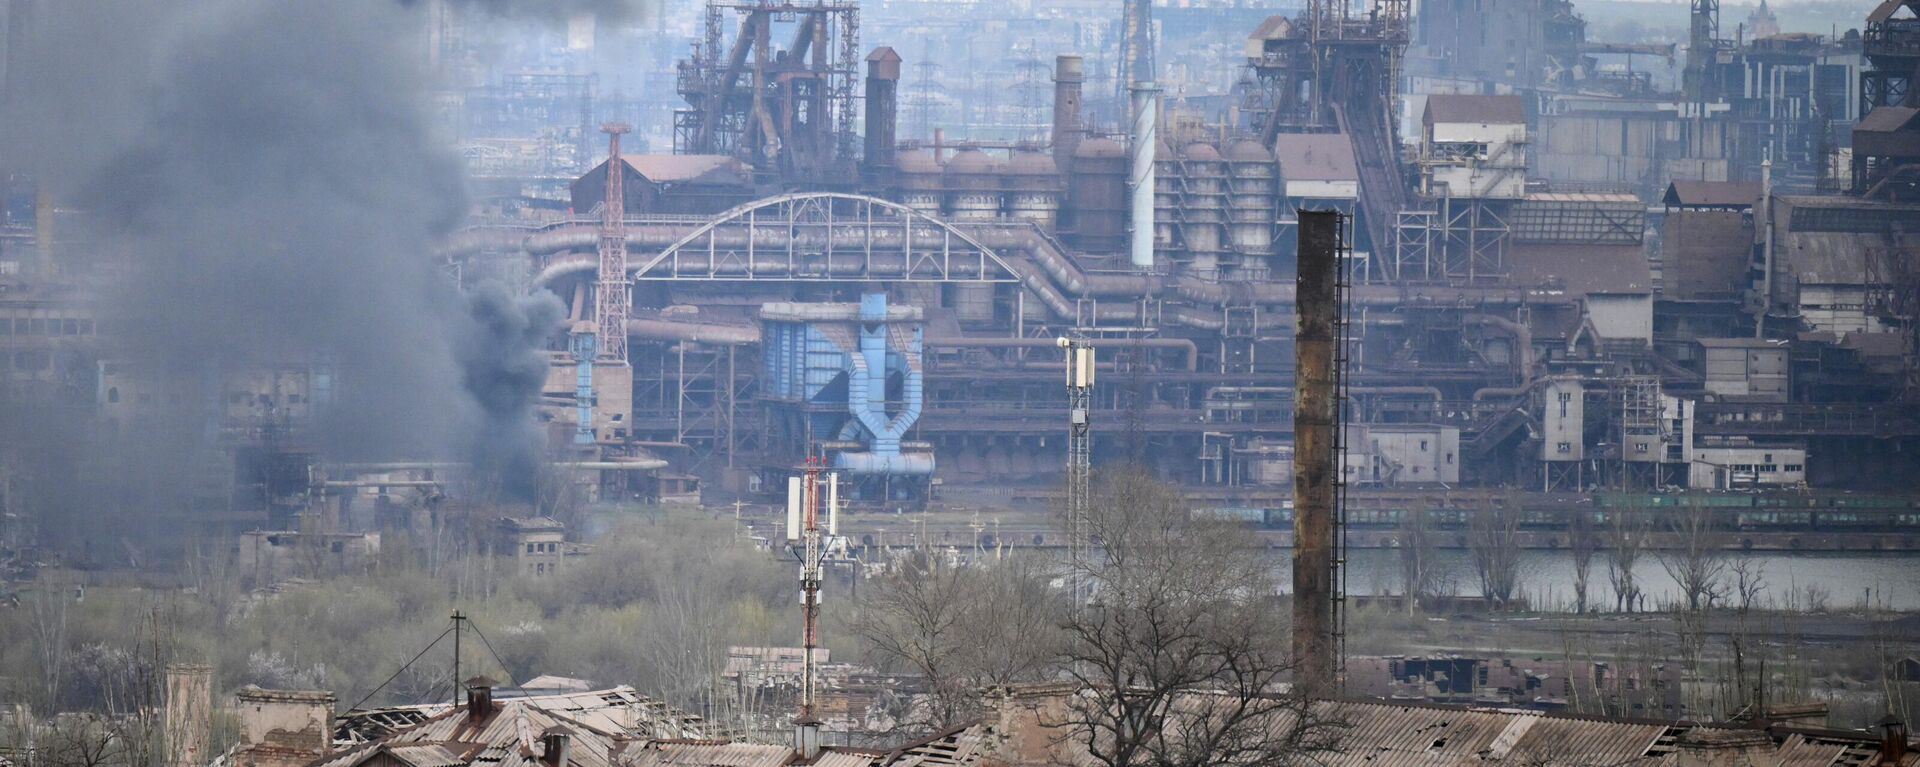 La planta de Azovstal en la ciudad ucraniana de Mariúpol - Sputnik Mundo, 1920, 06.05.2022